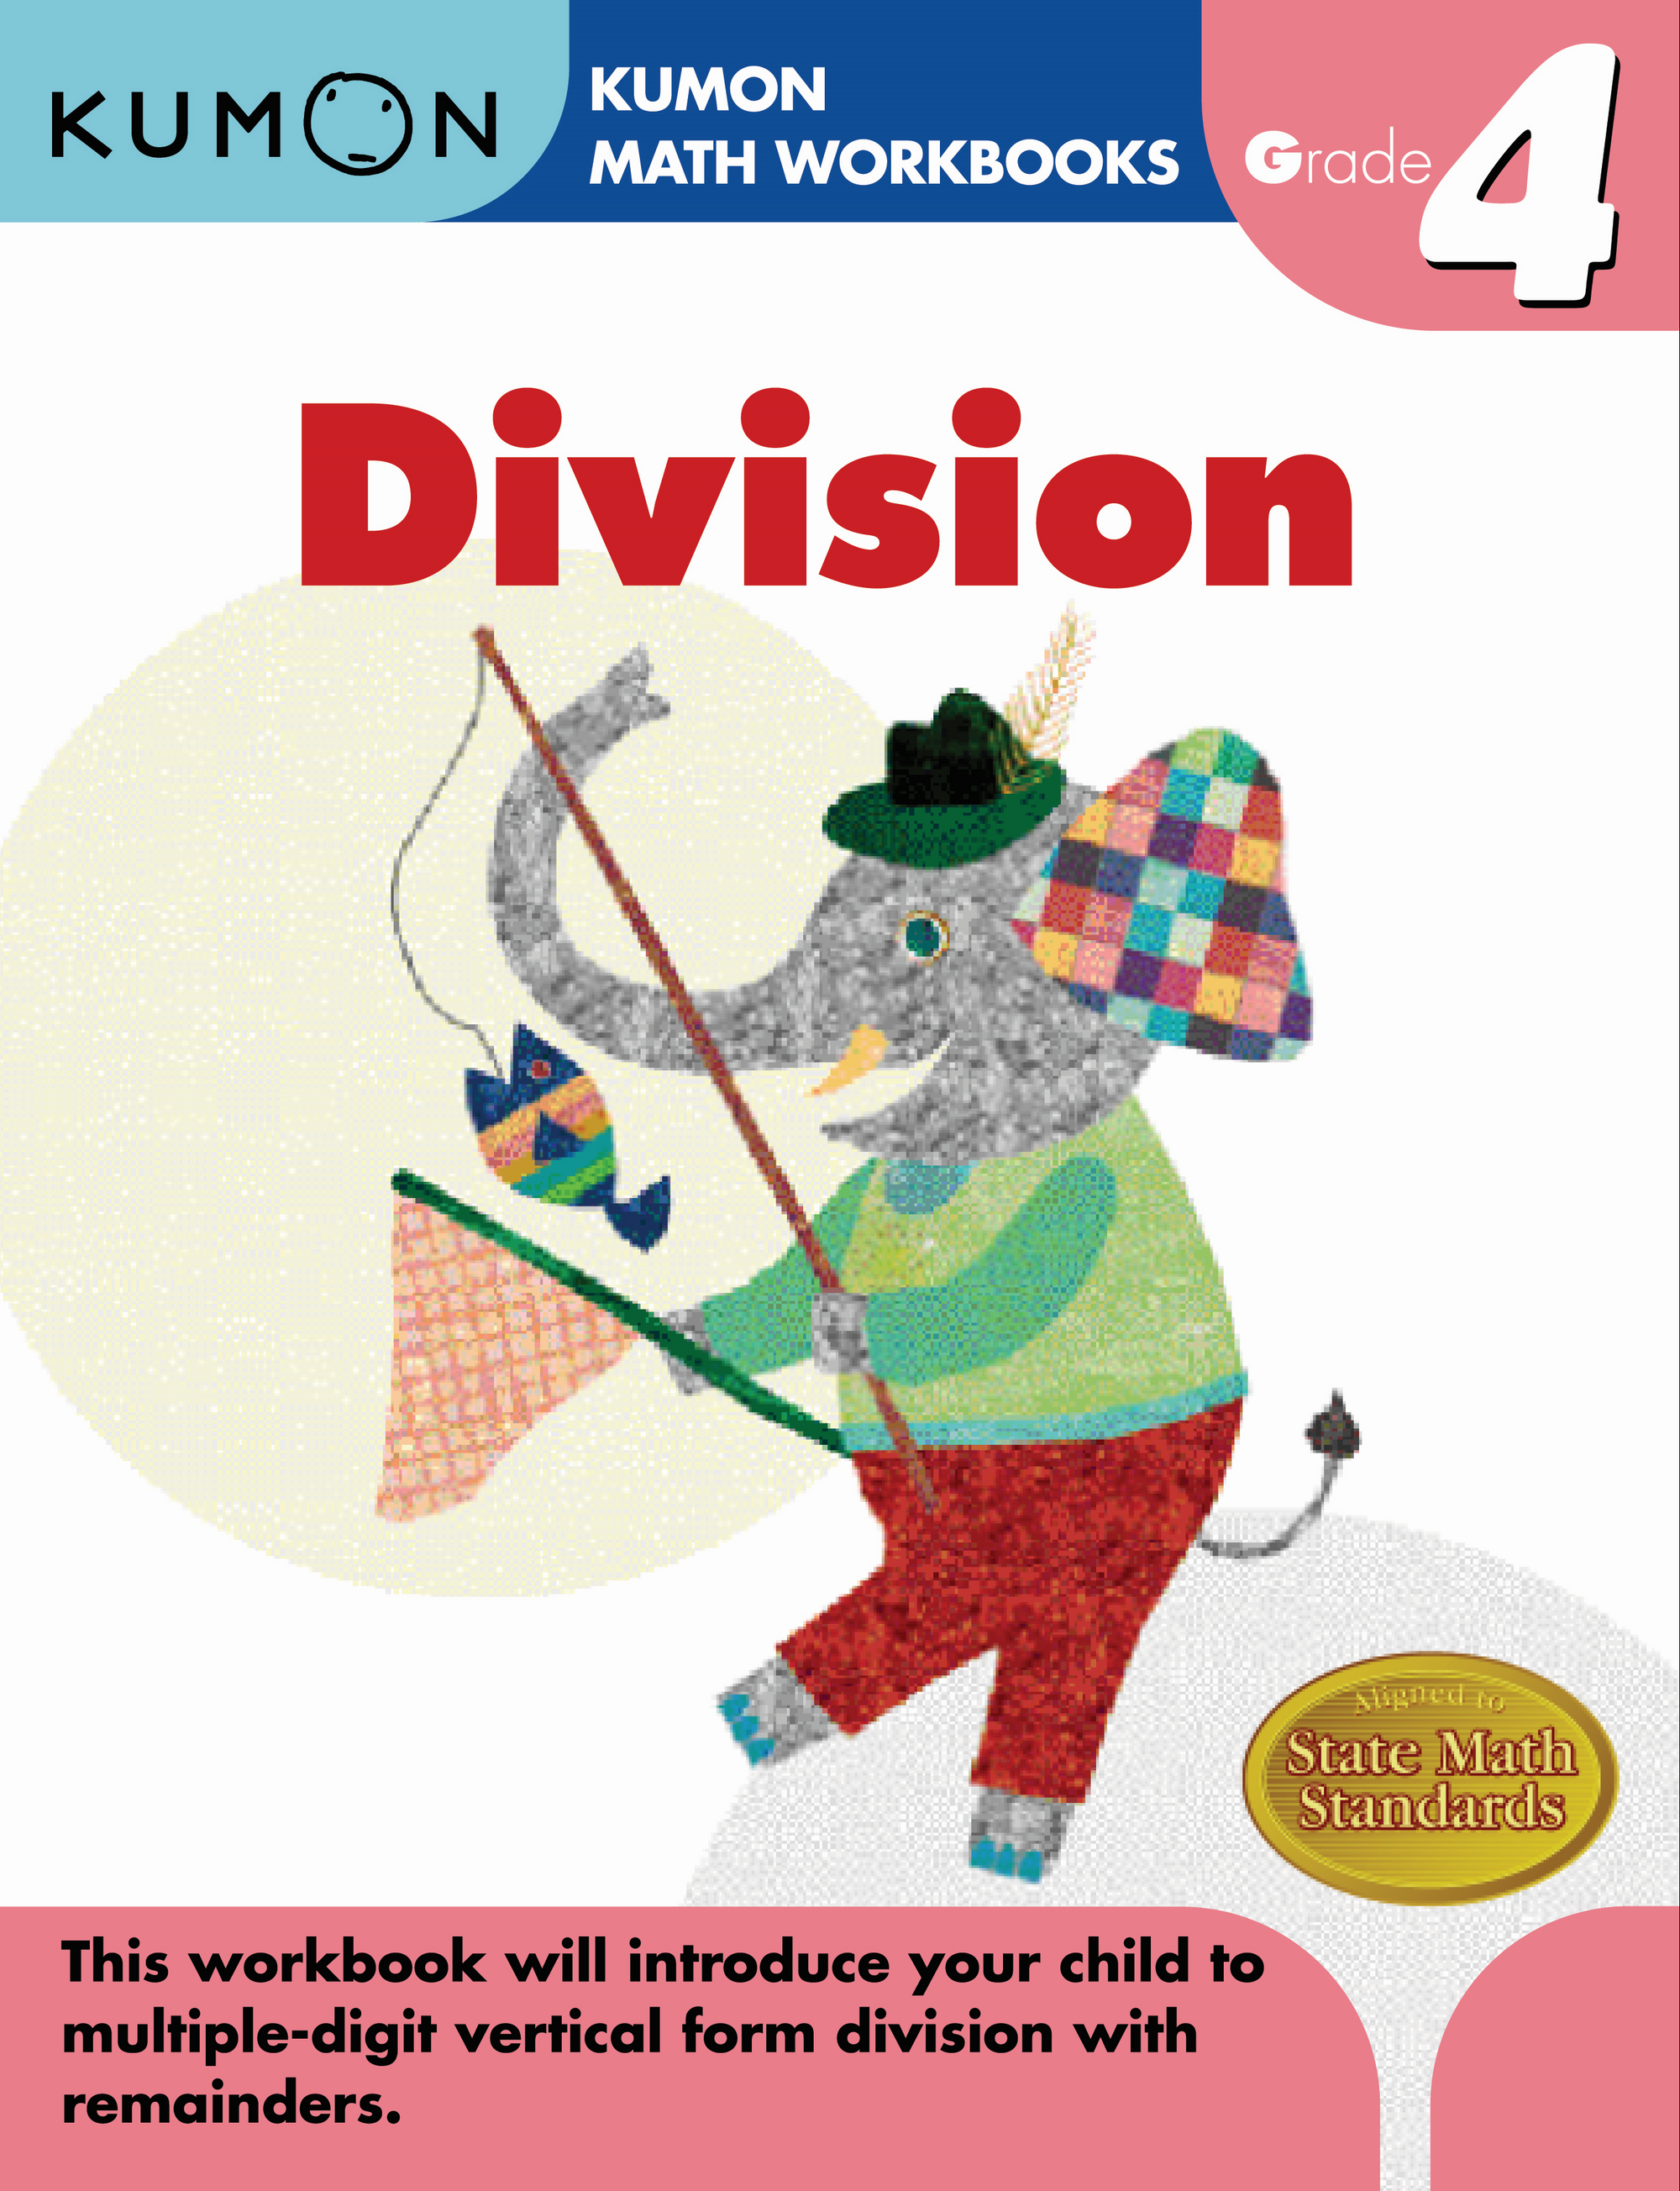 Kumon Math Workbooks Grade 4: Division